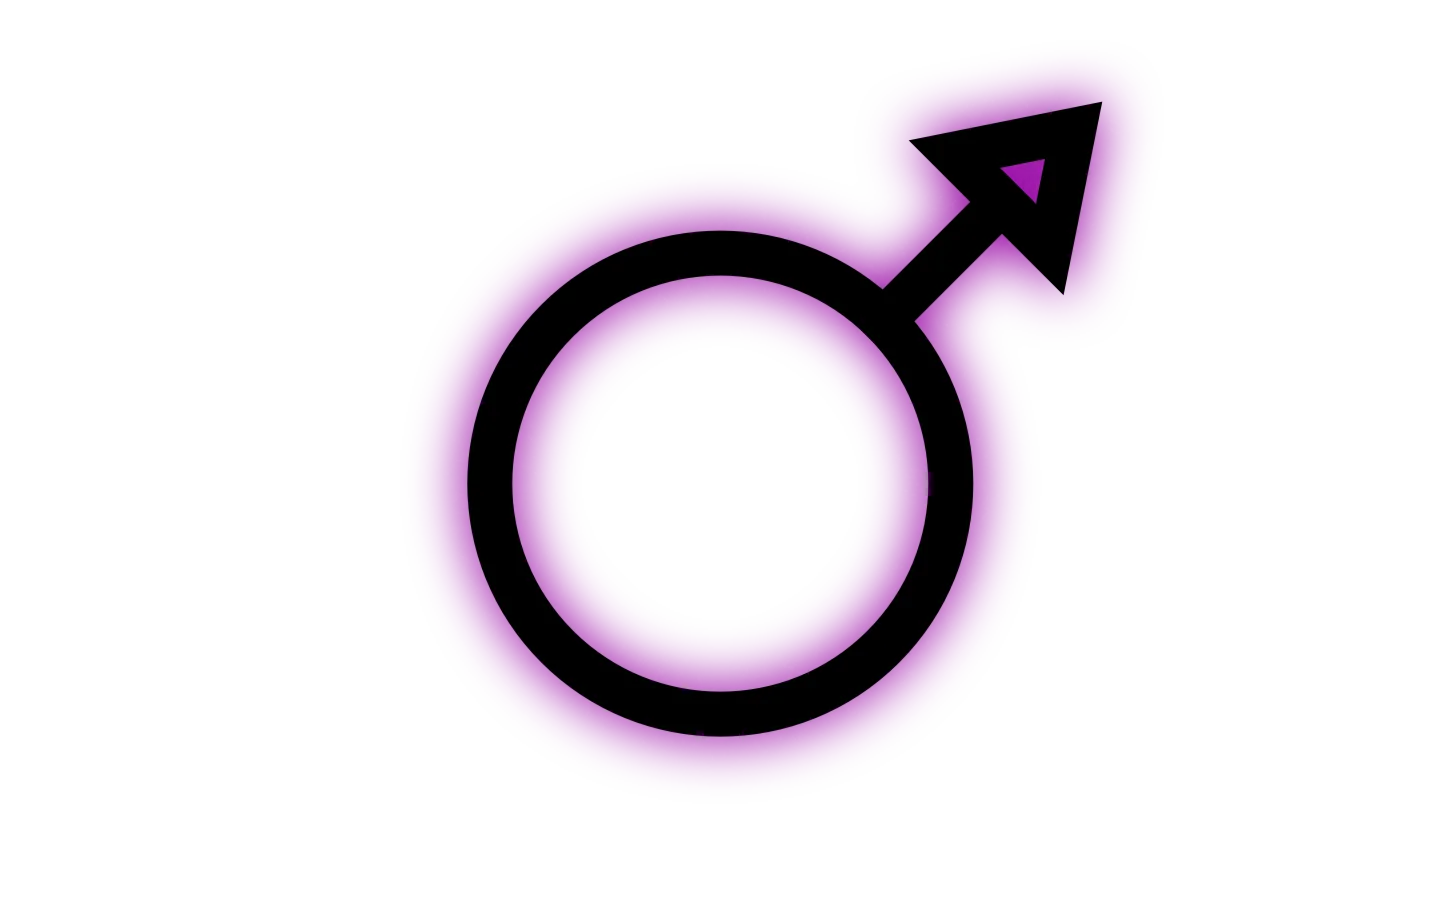 mars/masculinity symbol, black with a purple glow